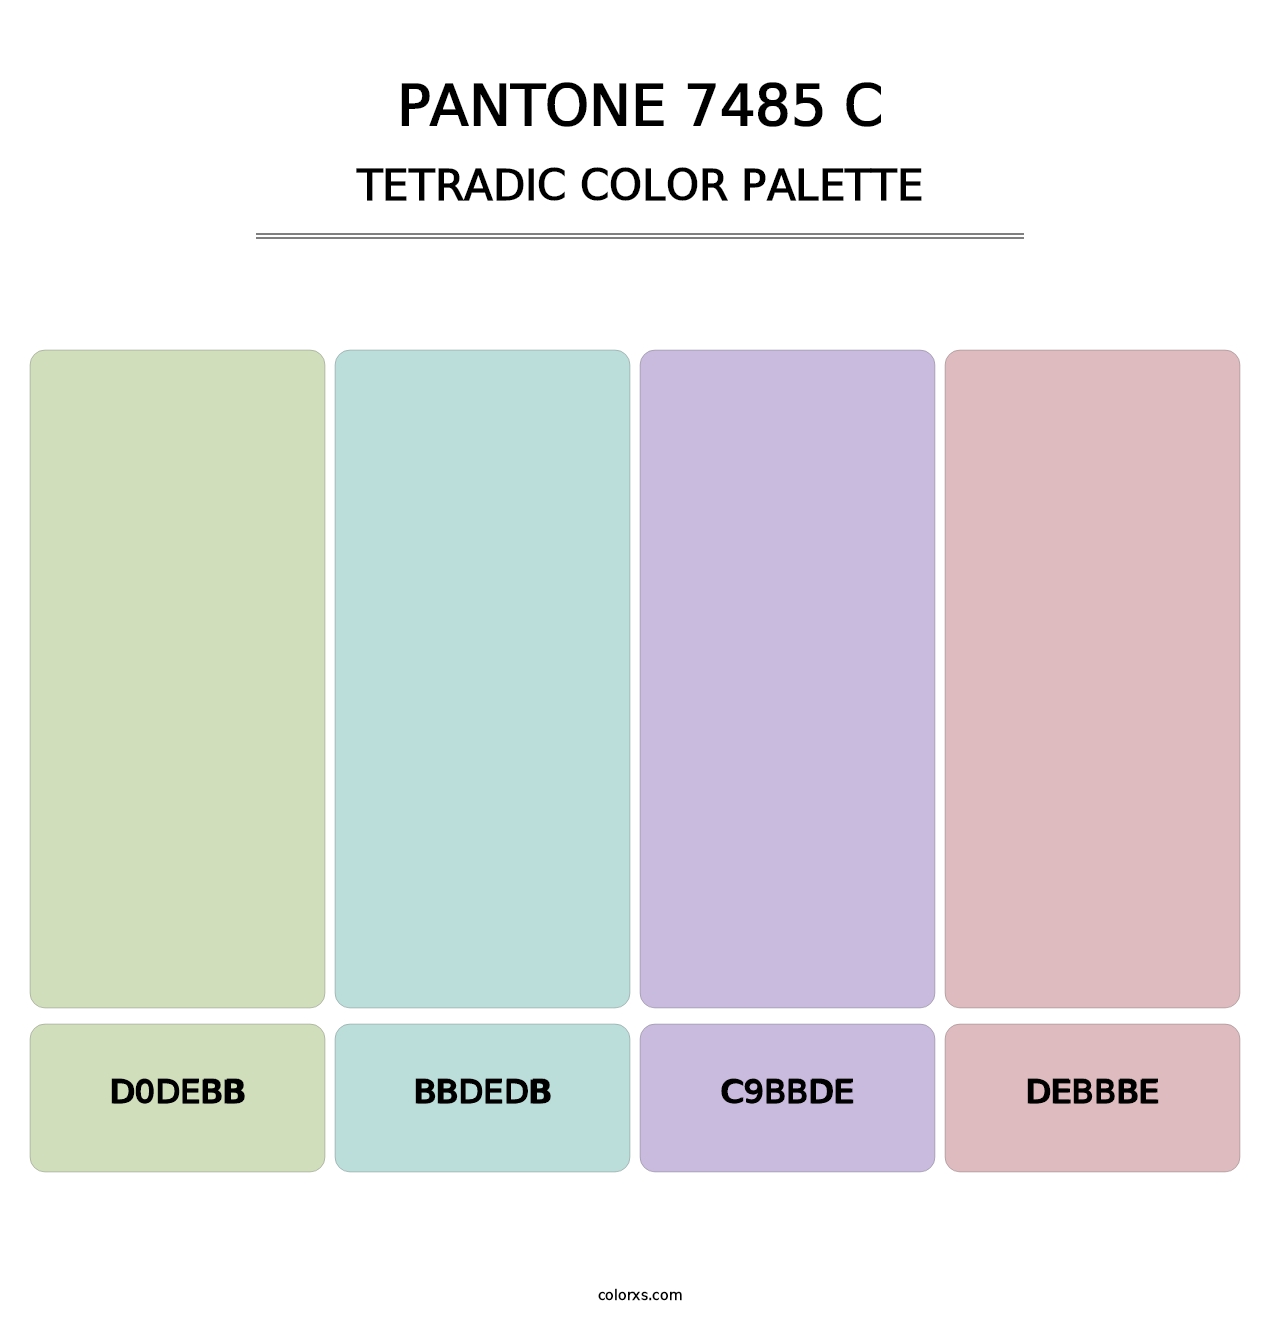 PANTONE 7485 C - Tetradic Color Palette